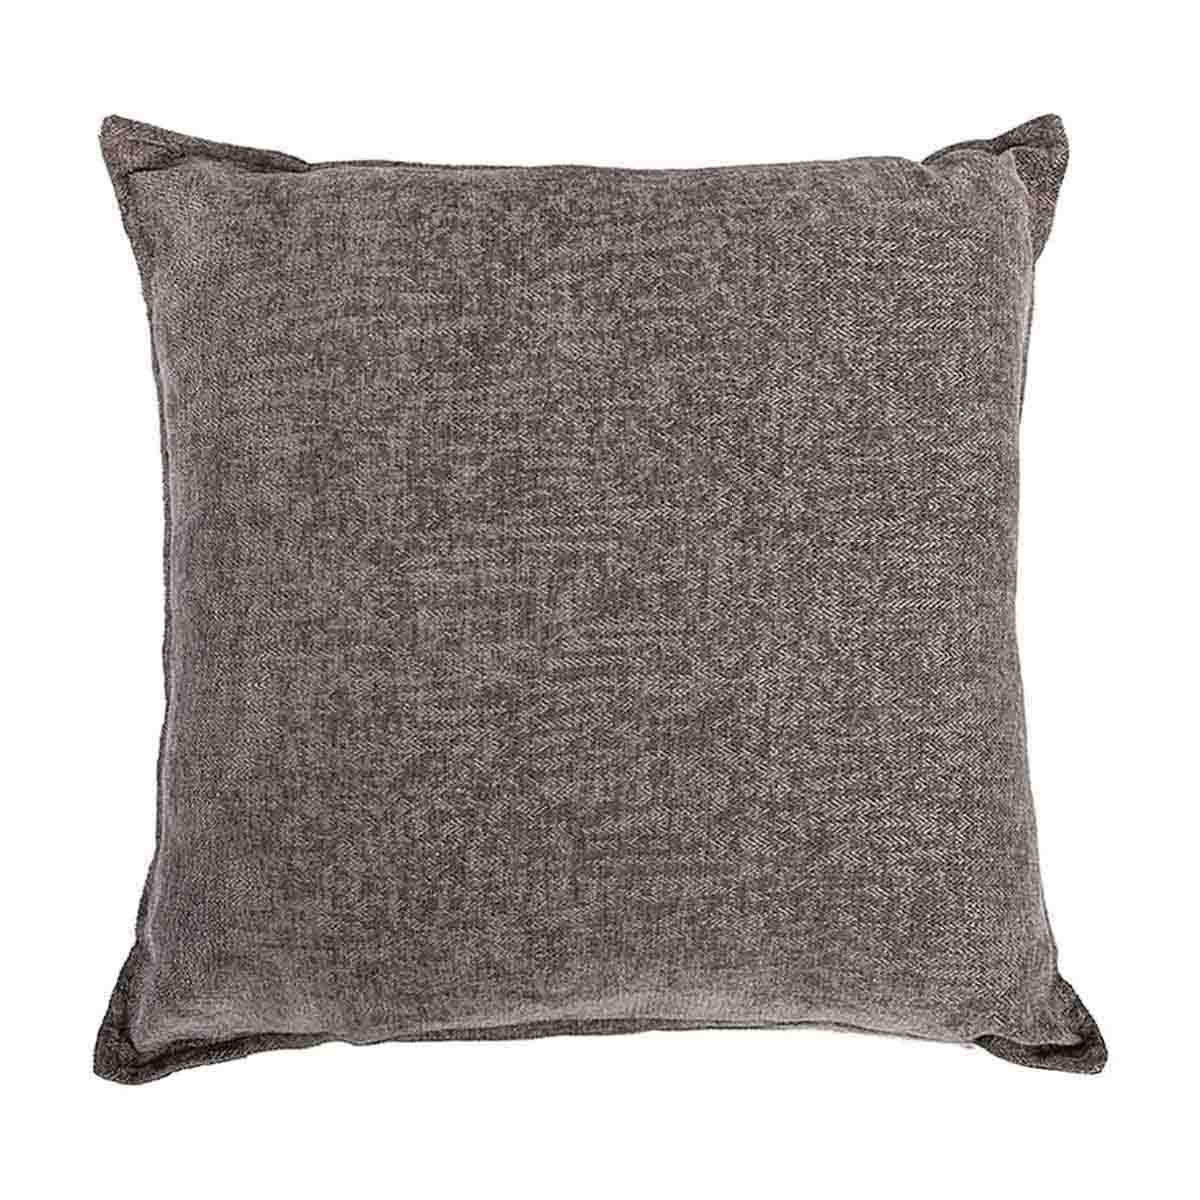 Decorative Square Pillow, Gray, 18 in x 18 in